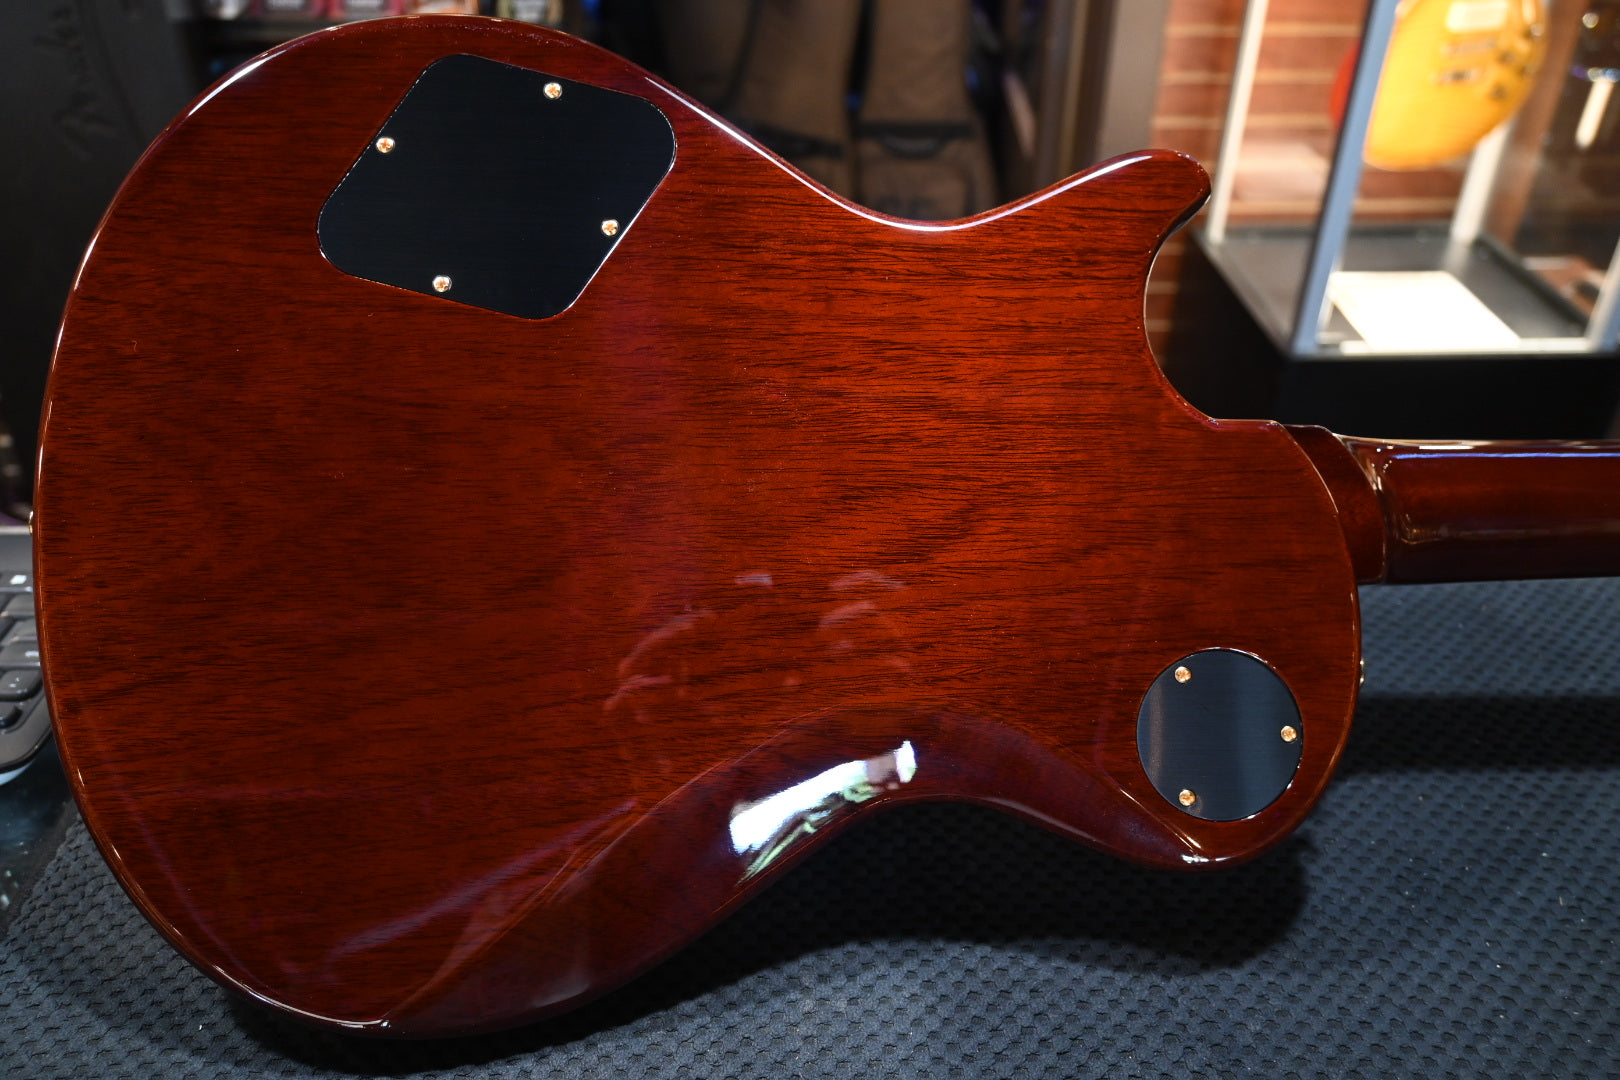 PRS McCarty SC 594 Single-Cut 10-Top - Orange Tiger Guitar #3983 - Danville Music